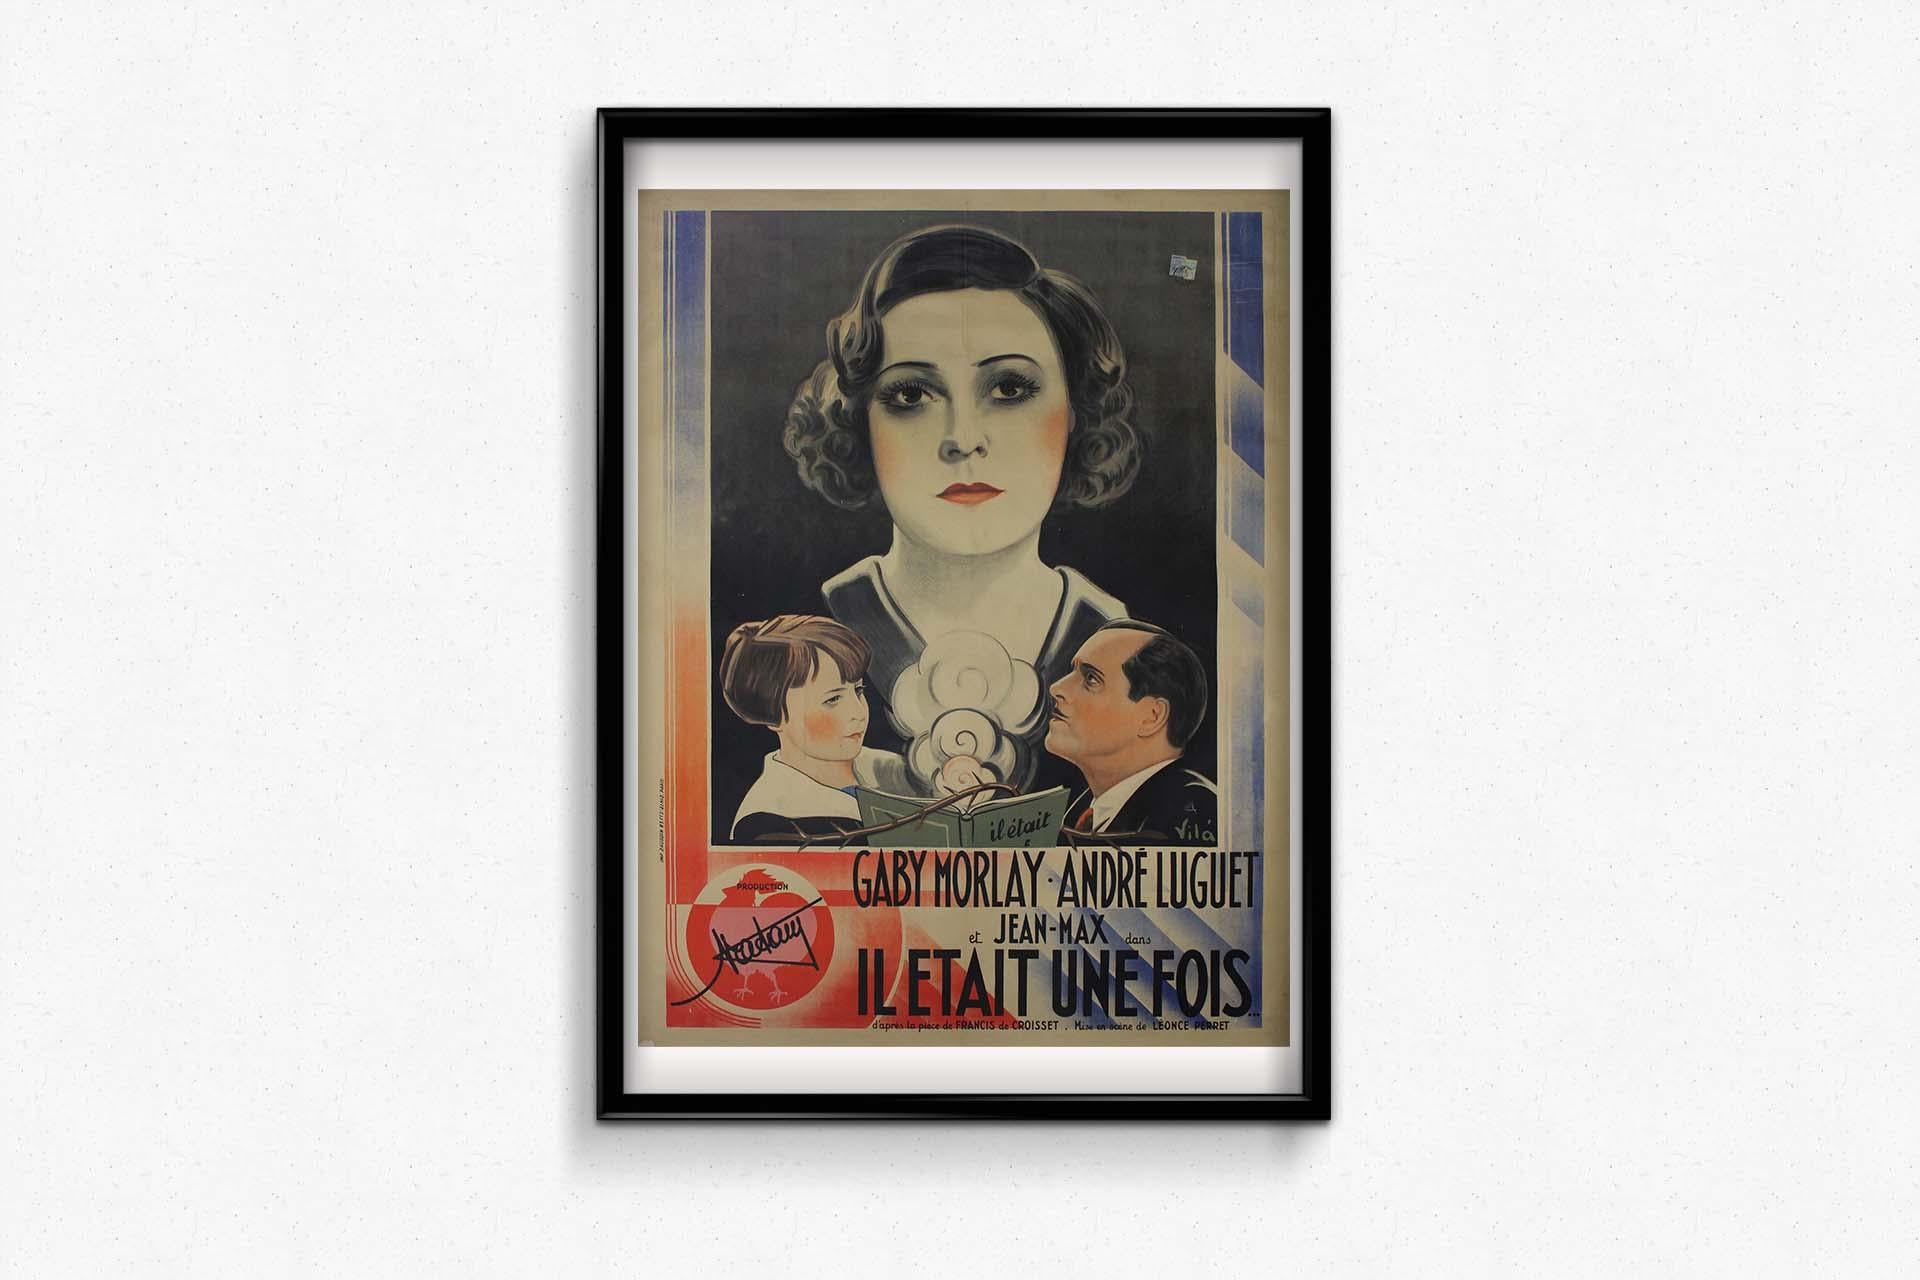 the 1933 original poster for 